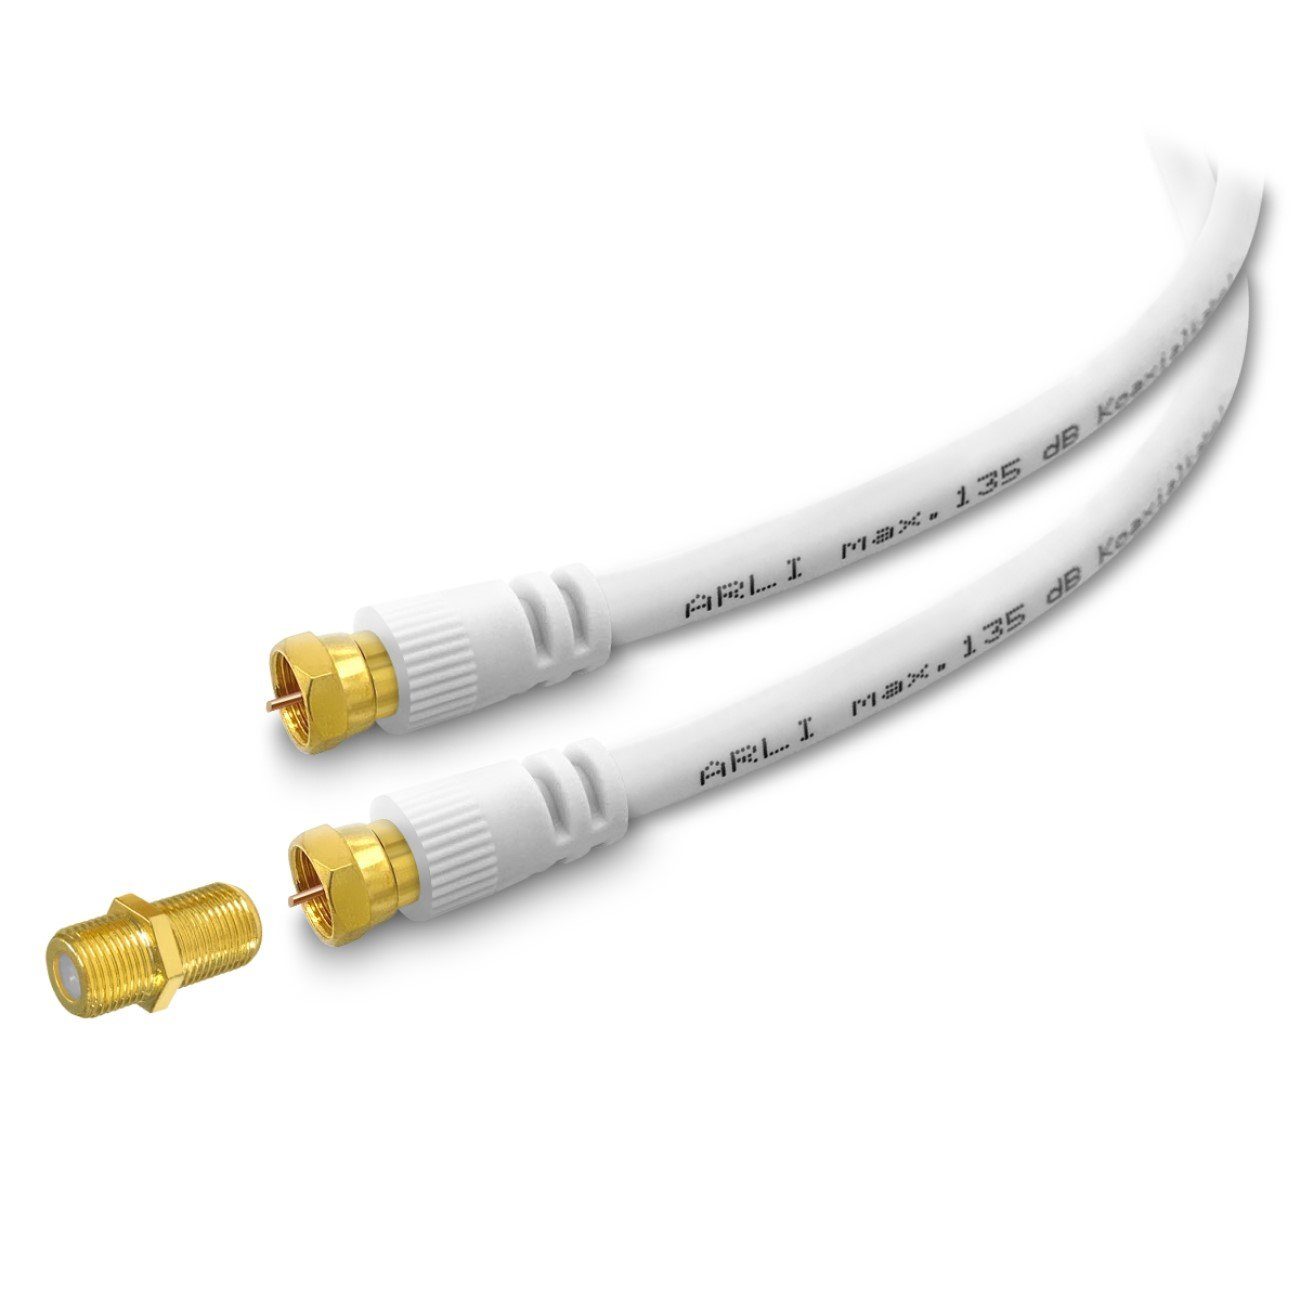 ARLI F-Verbinder (100 vergoldet 1m Satkabel TV-Kabel, HD TV cm), F-Stecker, dB Verlängerungskabel 135 Anschlusskabel